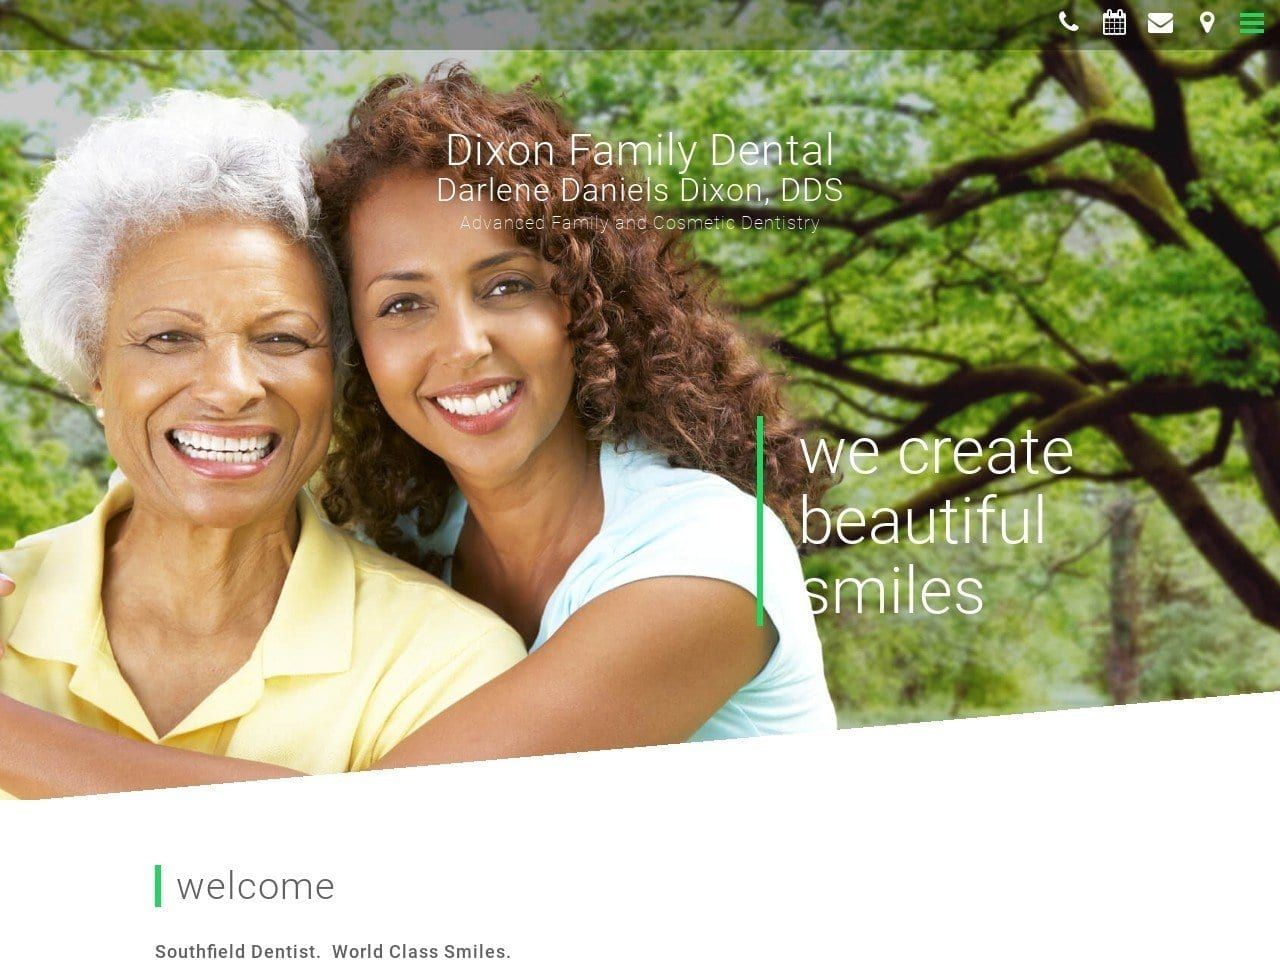 Dixon Family Dental Website Screenshot from dixonfamilydental.com